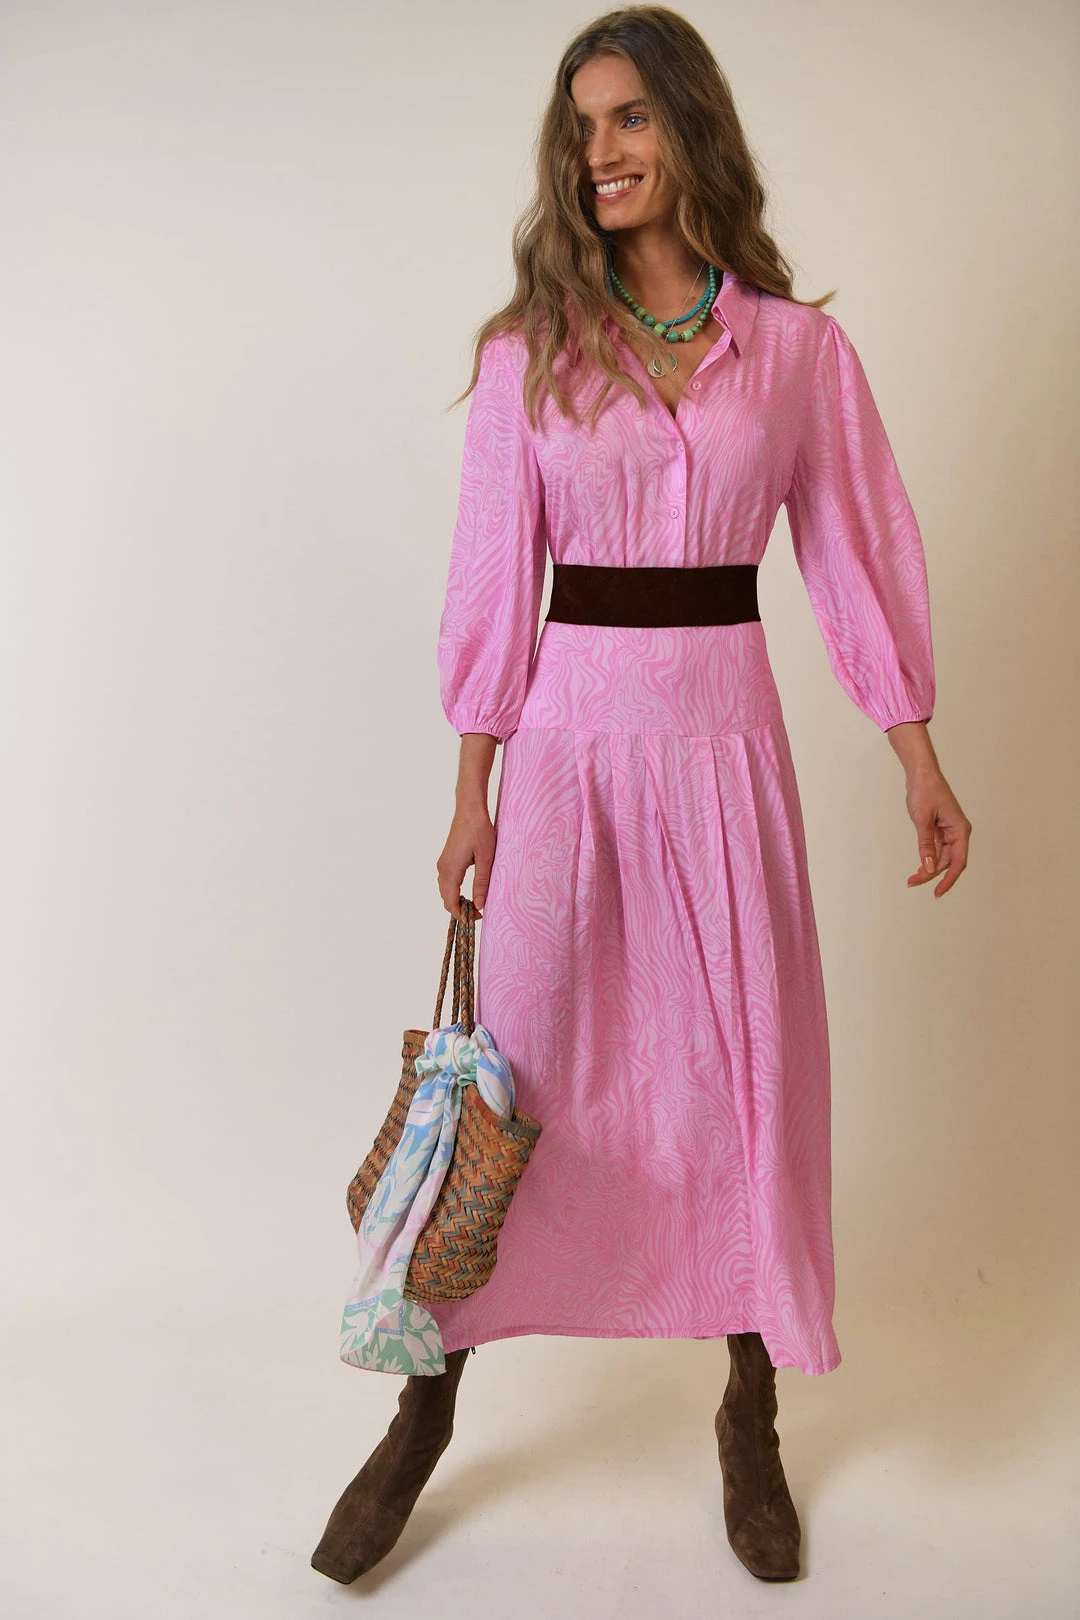 Rixo Izzy Dress in Pink worn by Kate ...